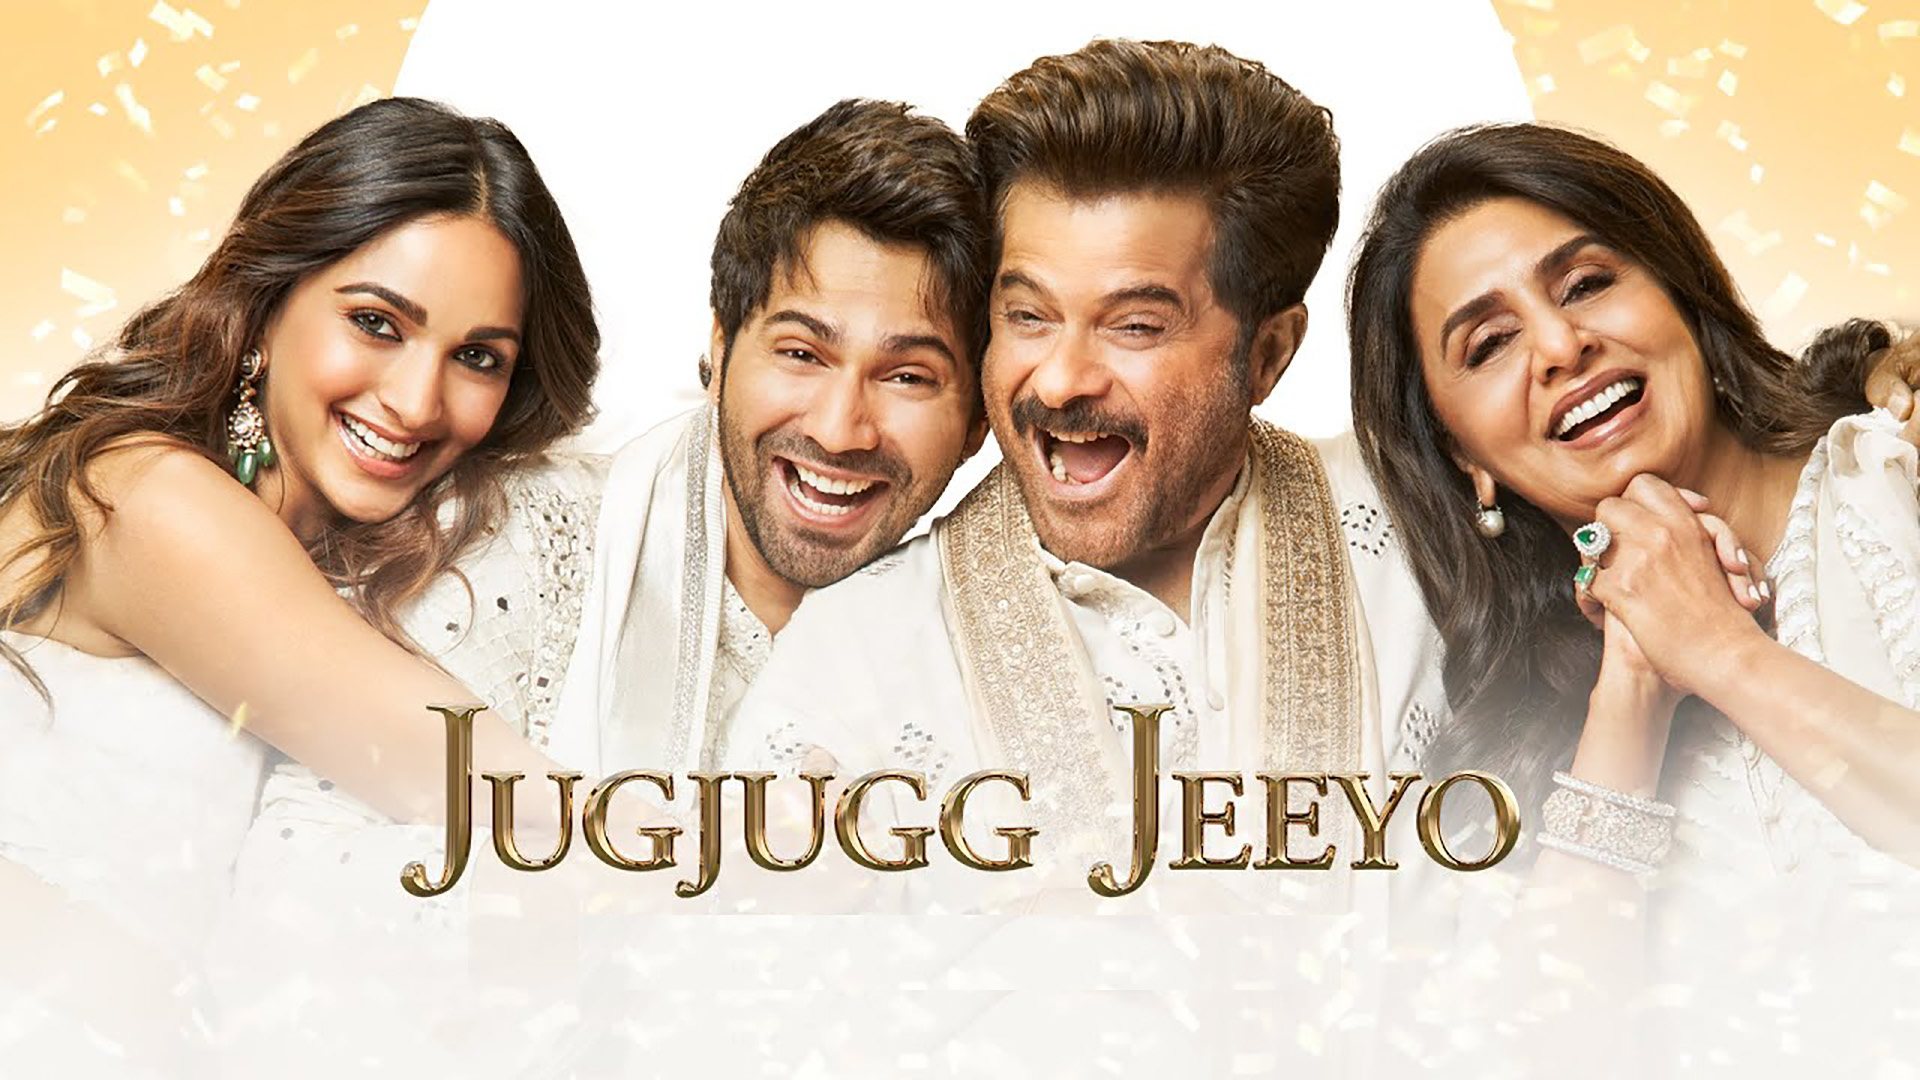 Super talented alumni of Actor Prepares Varun Dhawan, Kiara Advani & Maniesh Paul feature in the family comedy-drama film 'Jug Jugg Jeeyo'